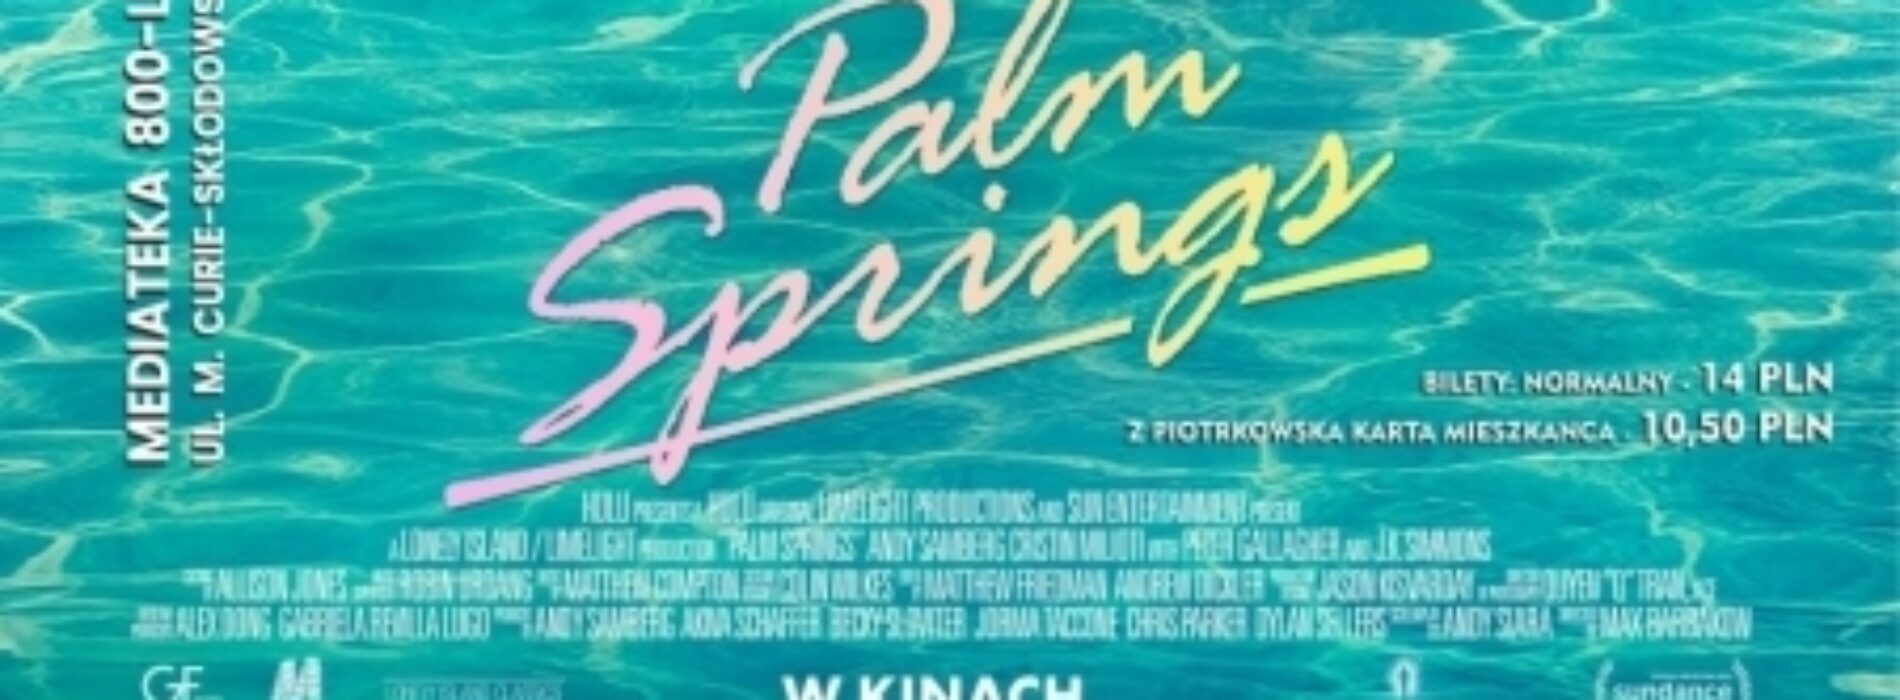 “Palm Springs” w kinie PIKSEL